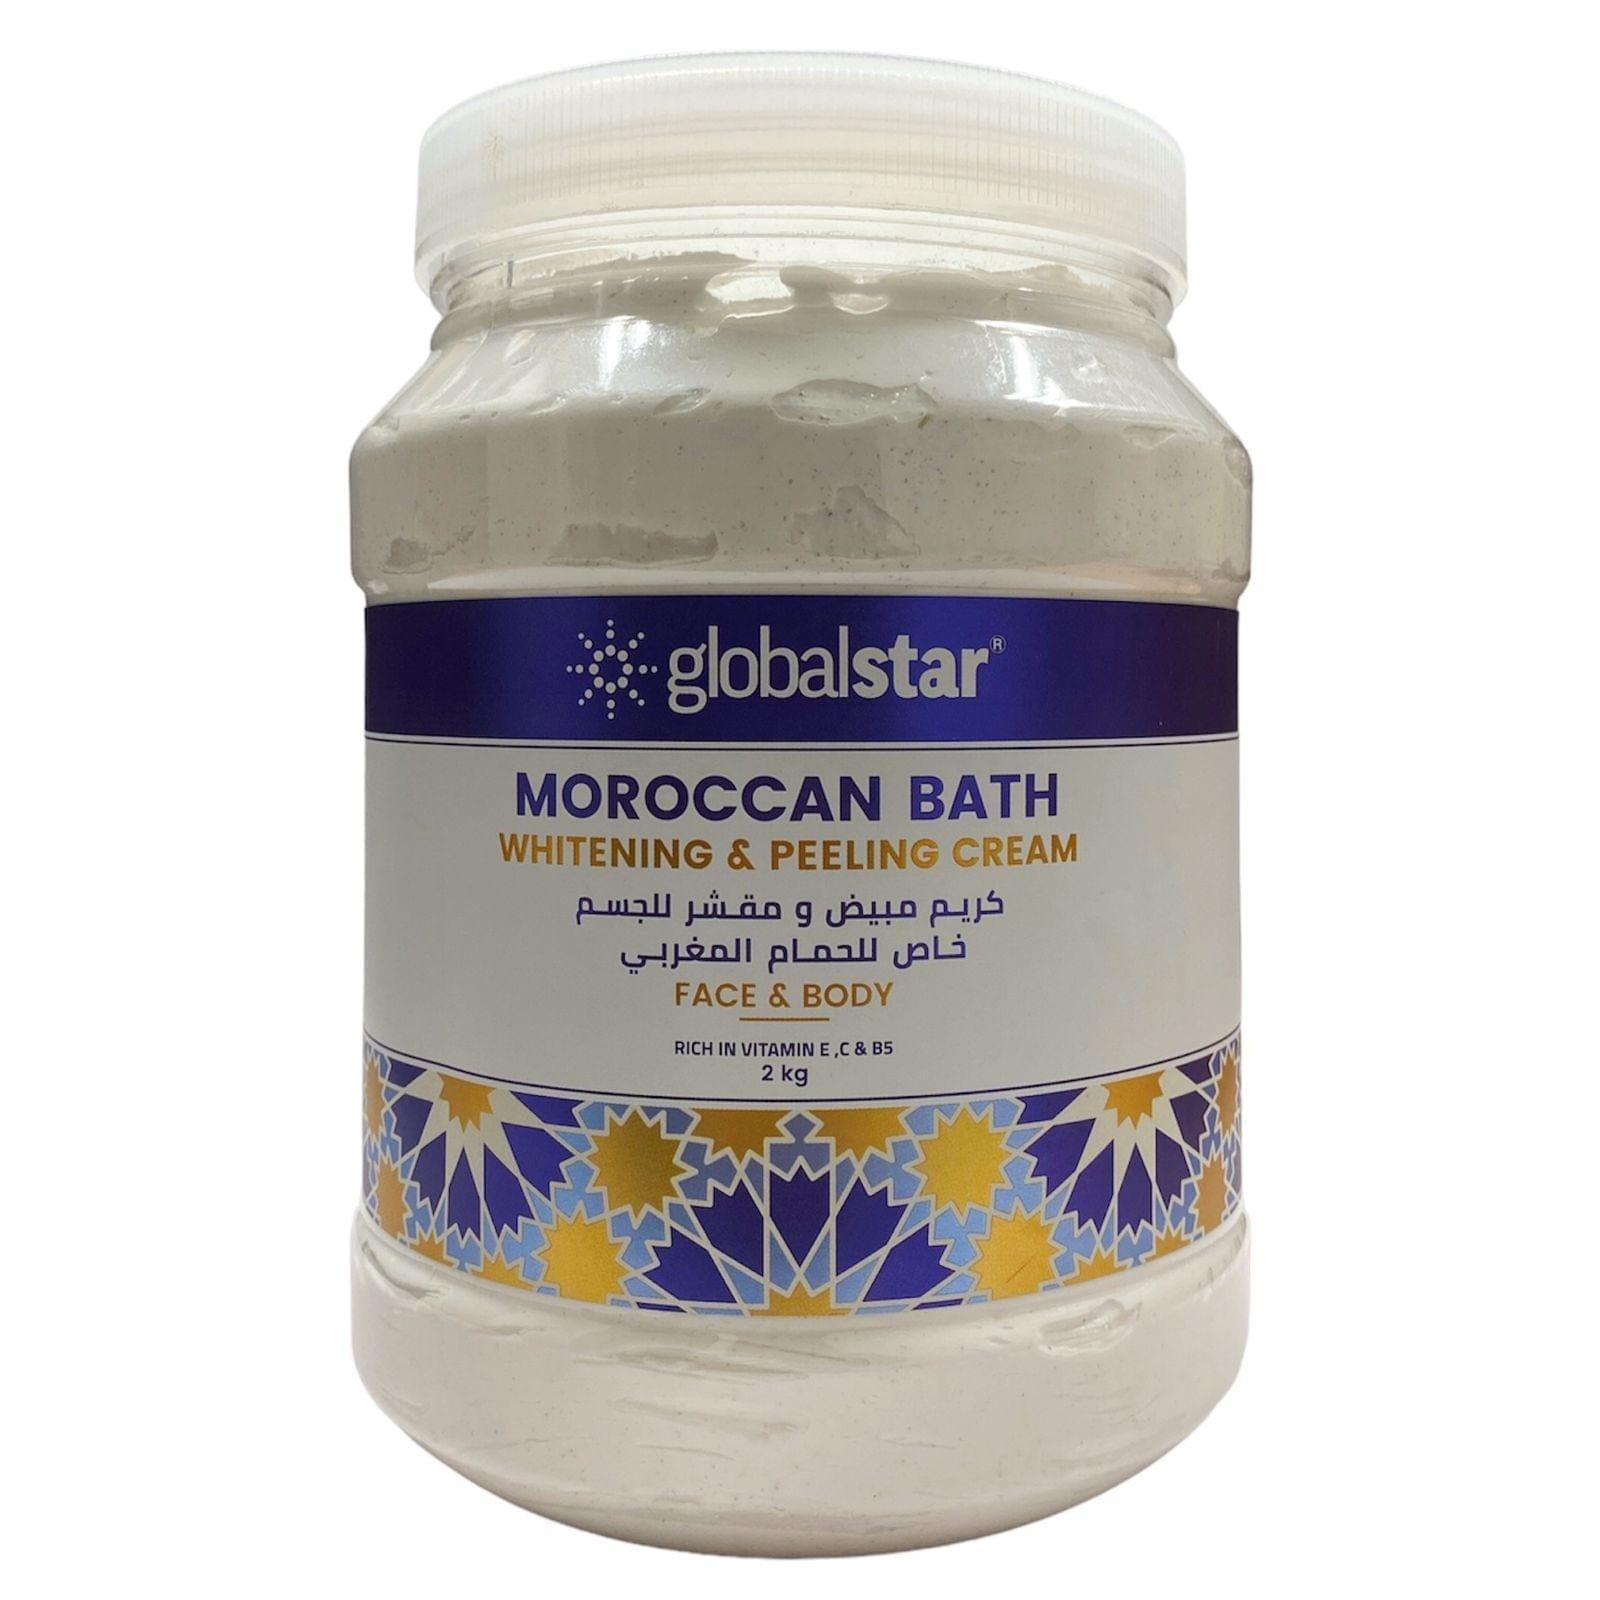 Globalstar Moroccan Bath Whitening And Peeling Cream Face & Body 2kg